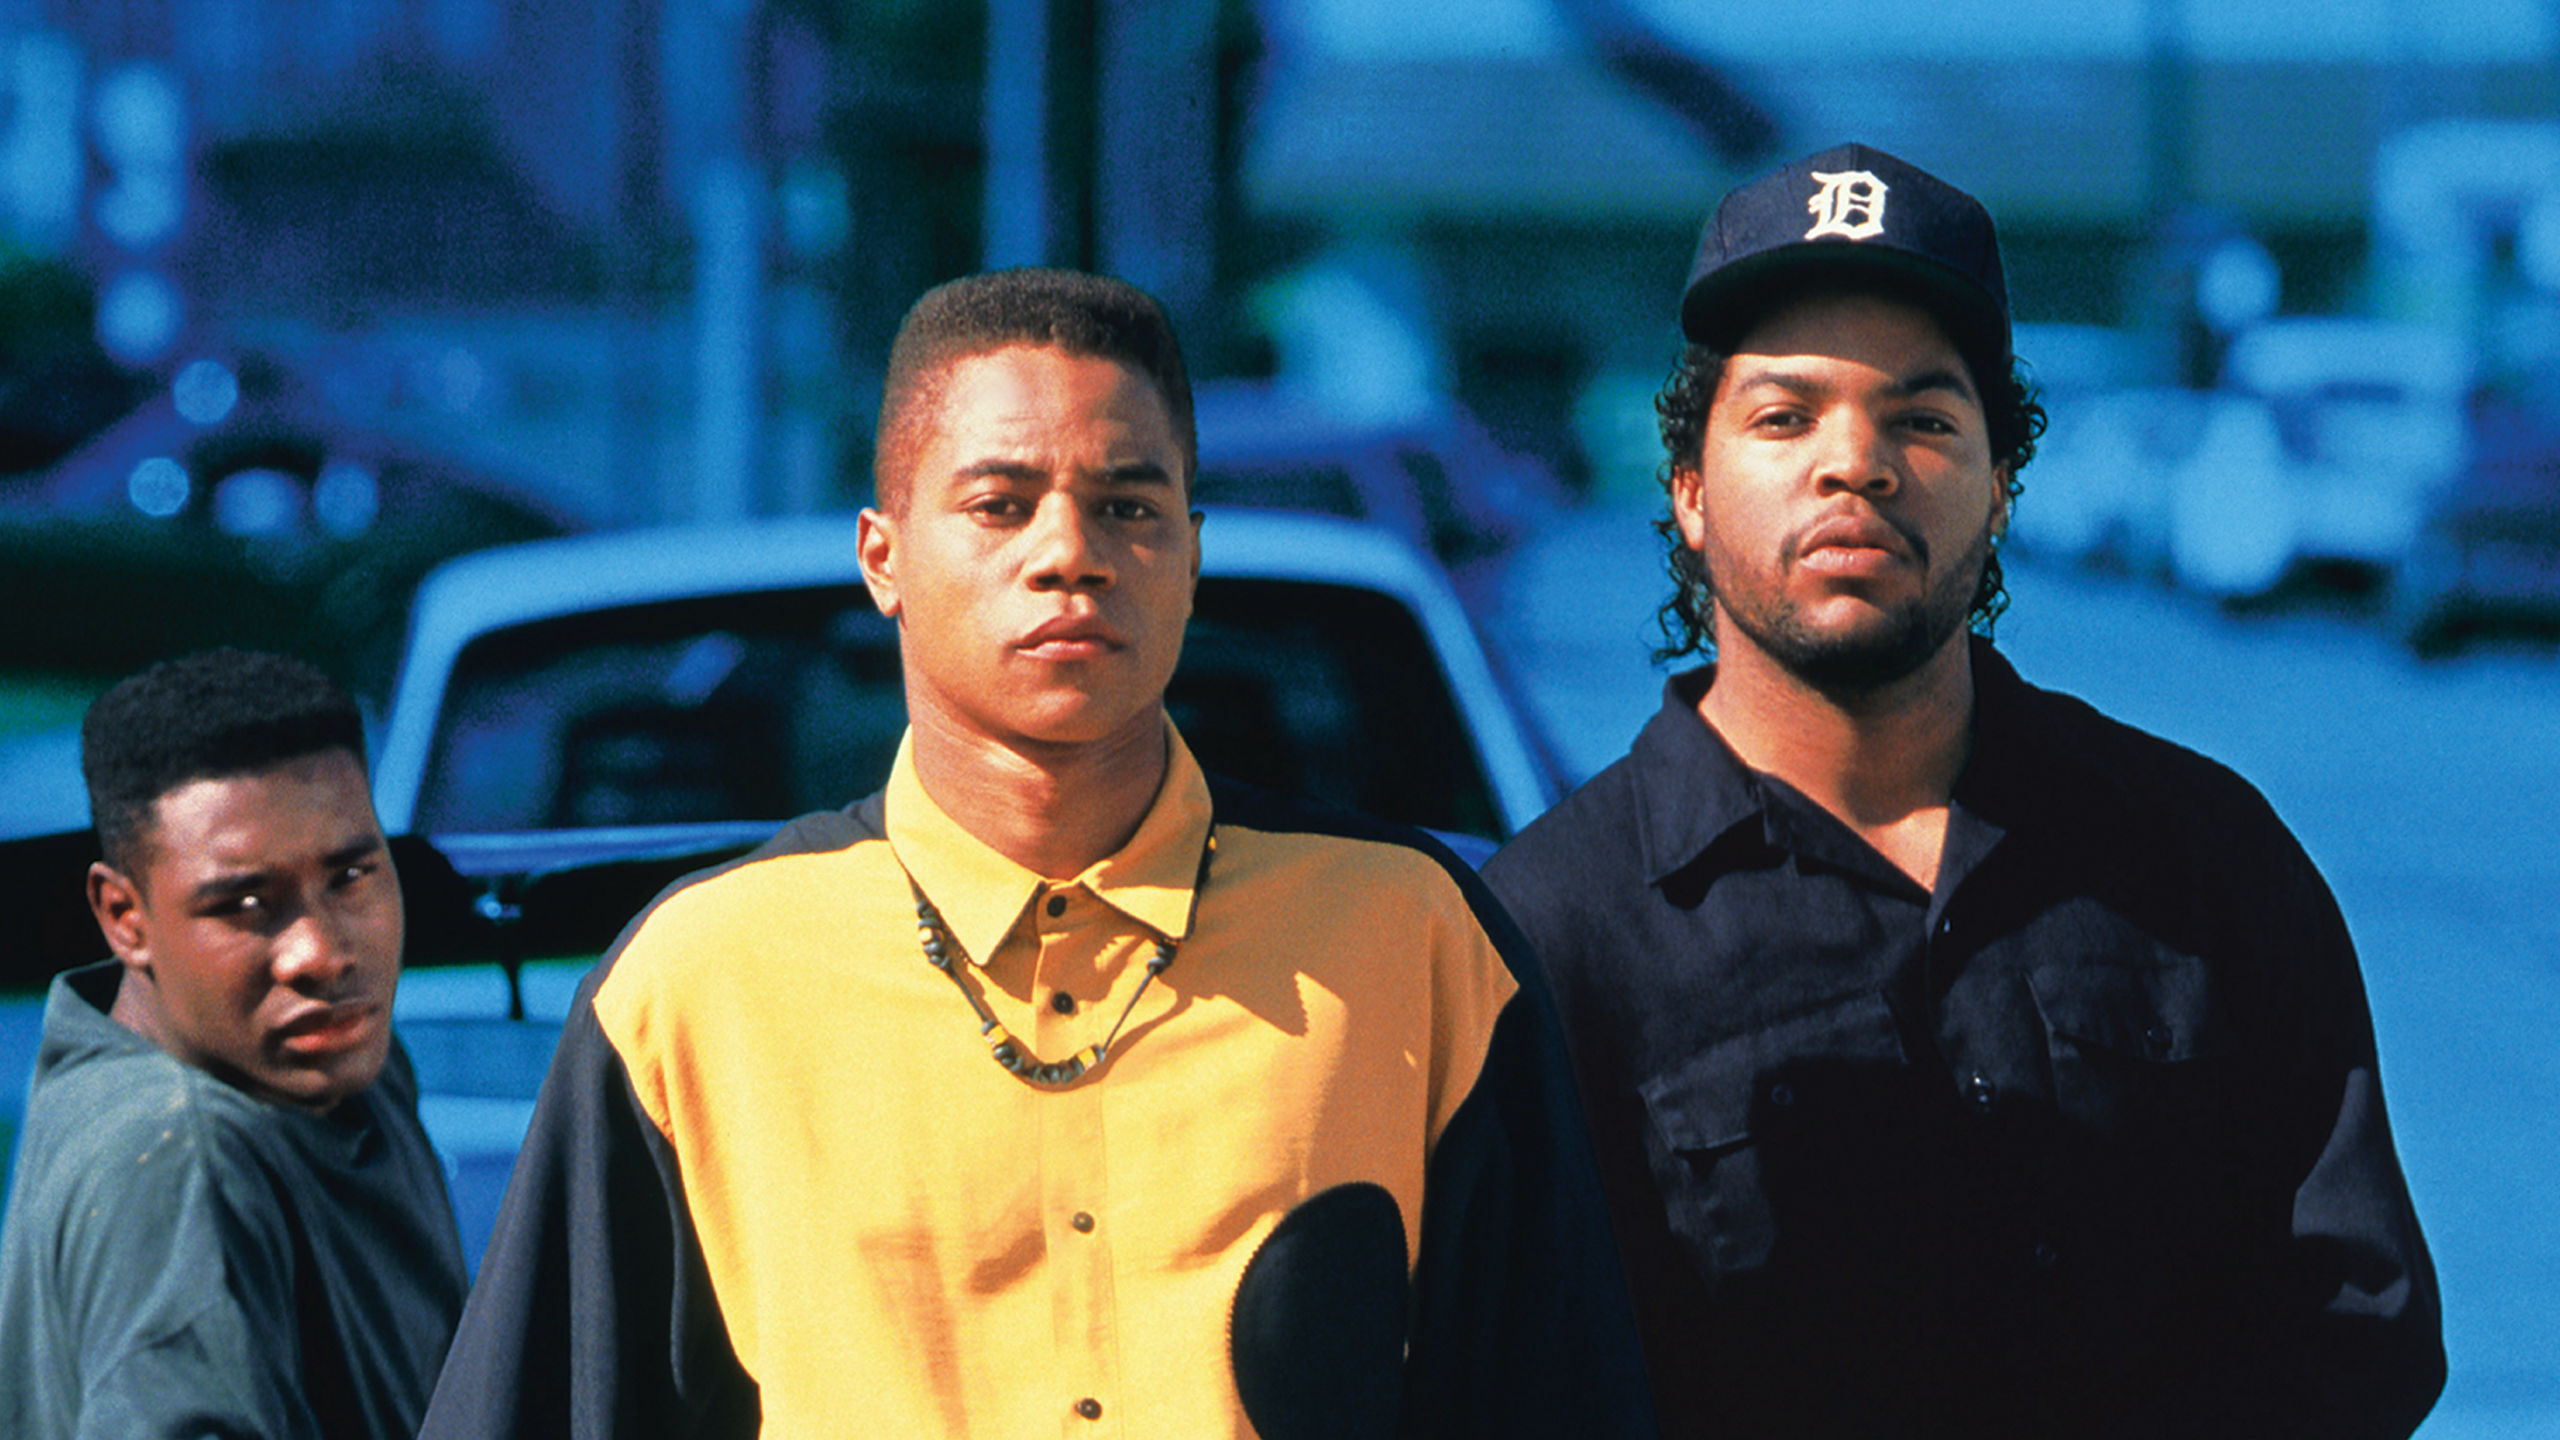 Брат по соседству. Айс Кьюб ребята с улицы. Ребята с улицы (1991) Boyz n the Hood.